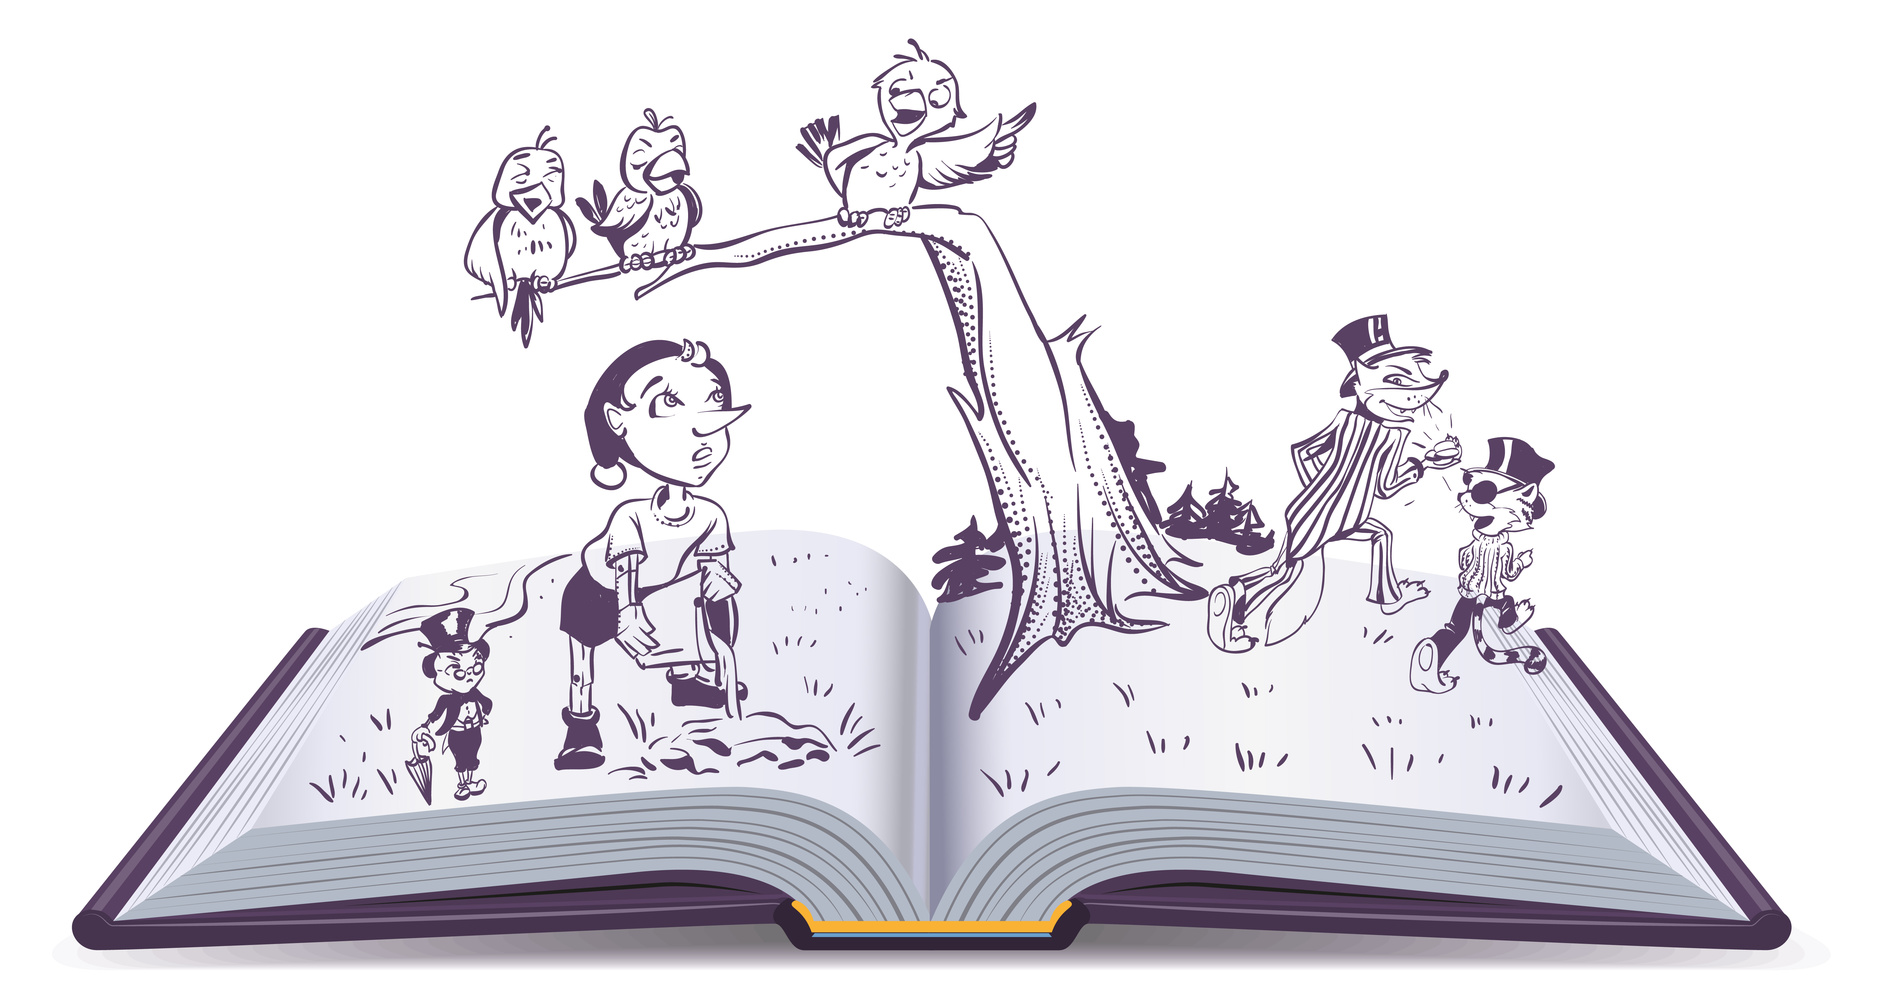 Open book illustration tale of Pinocchio. Vector cartoon